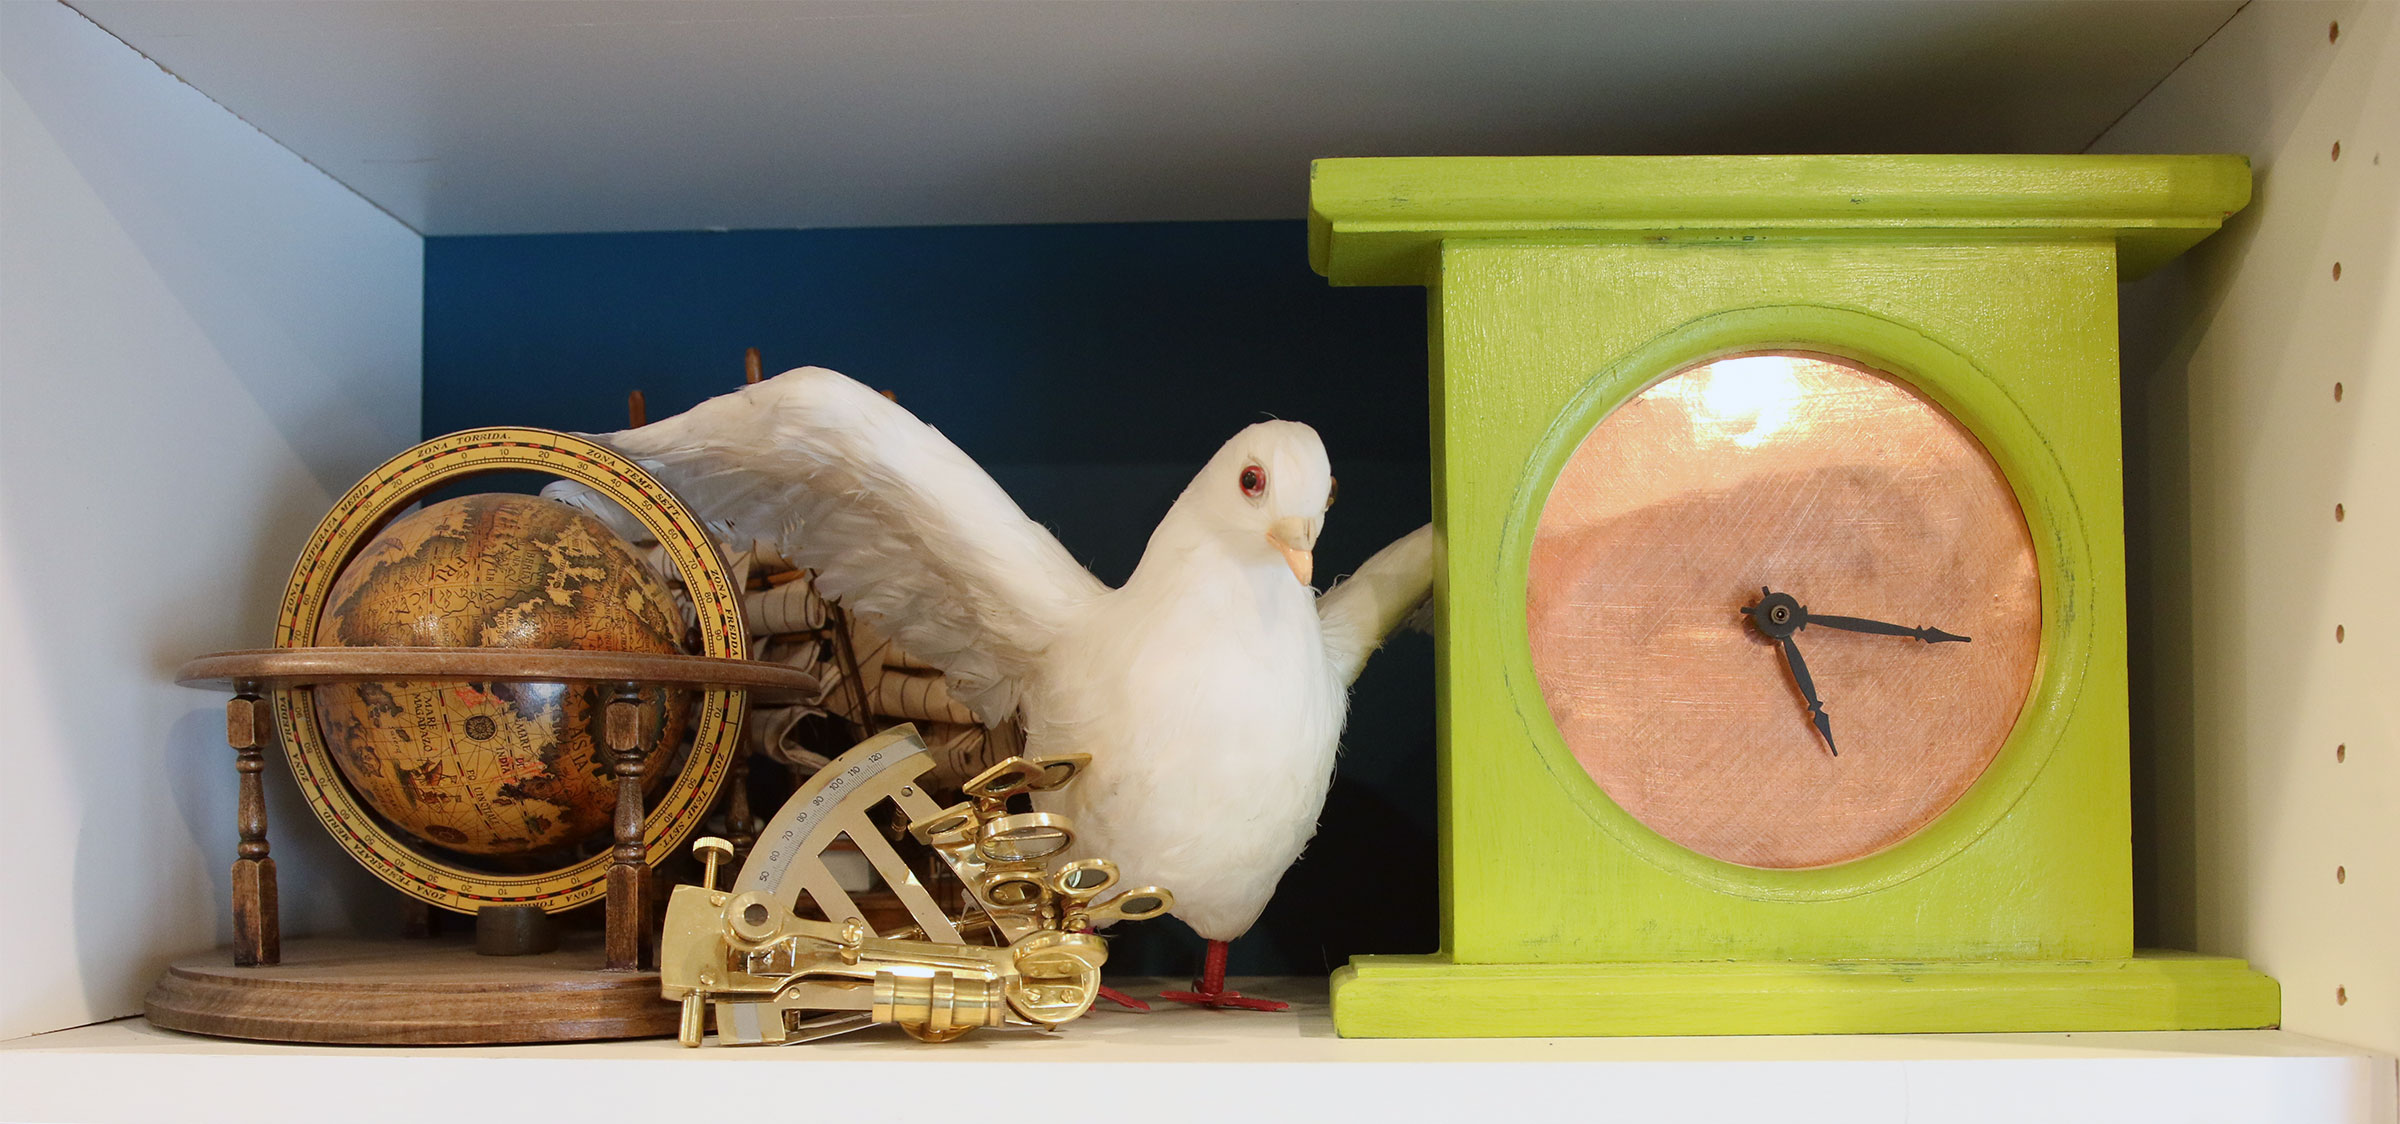 A globe, a compass, a statue of a bird, and a clock crammed into a small shelf.